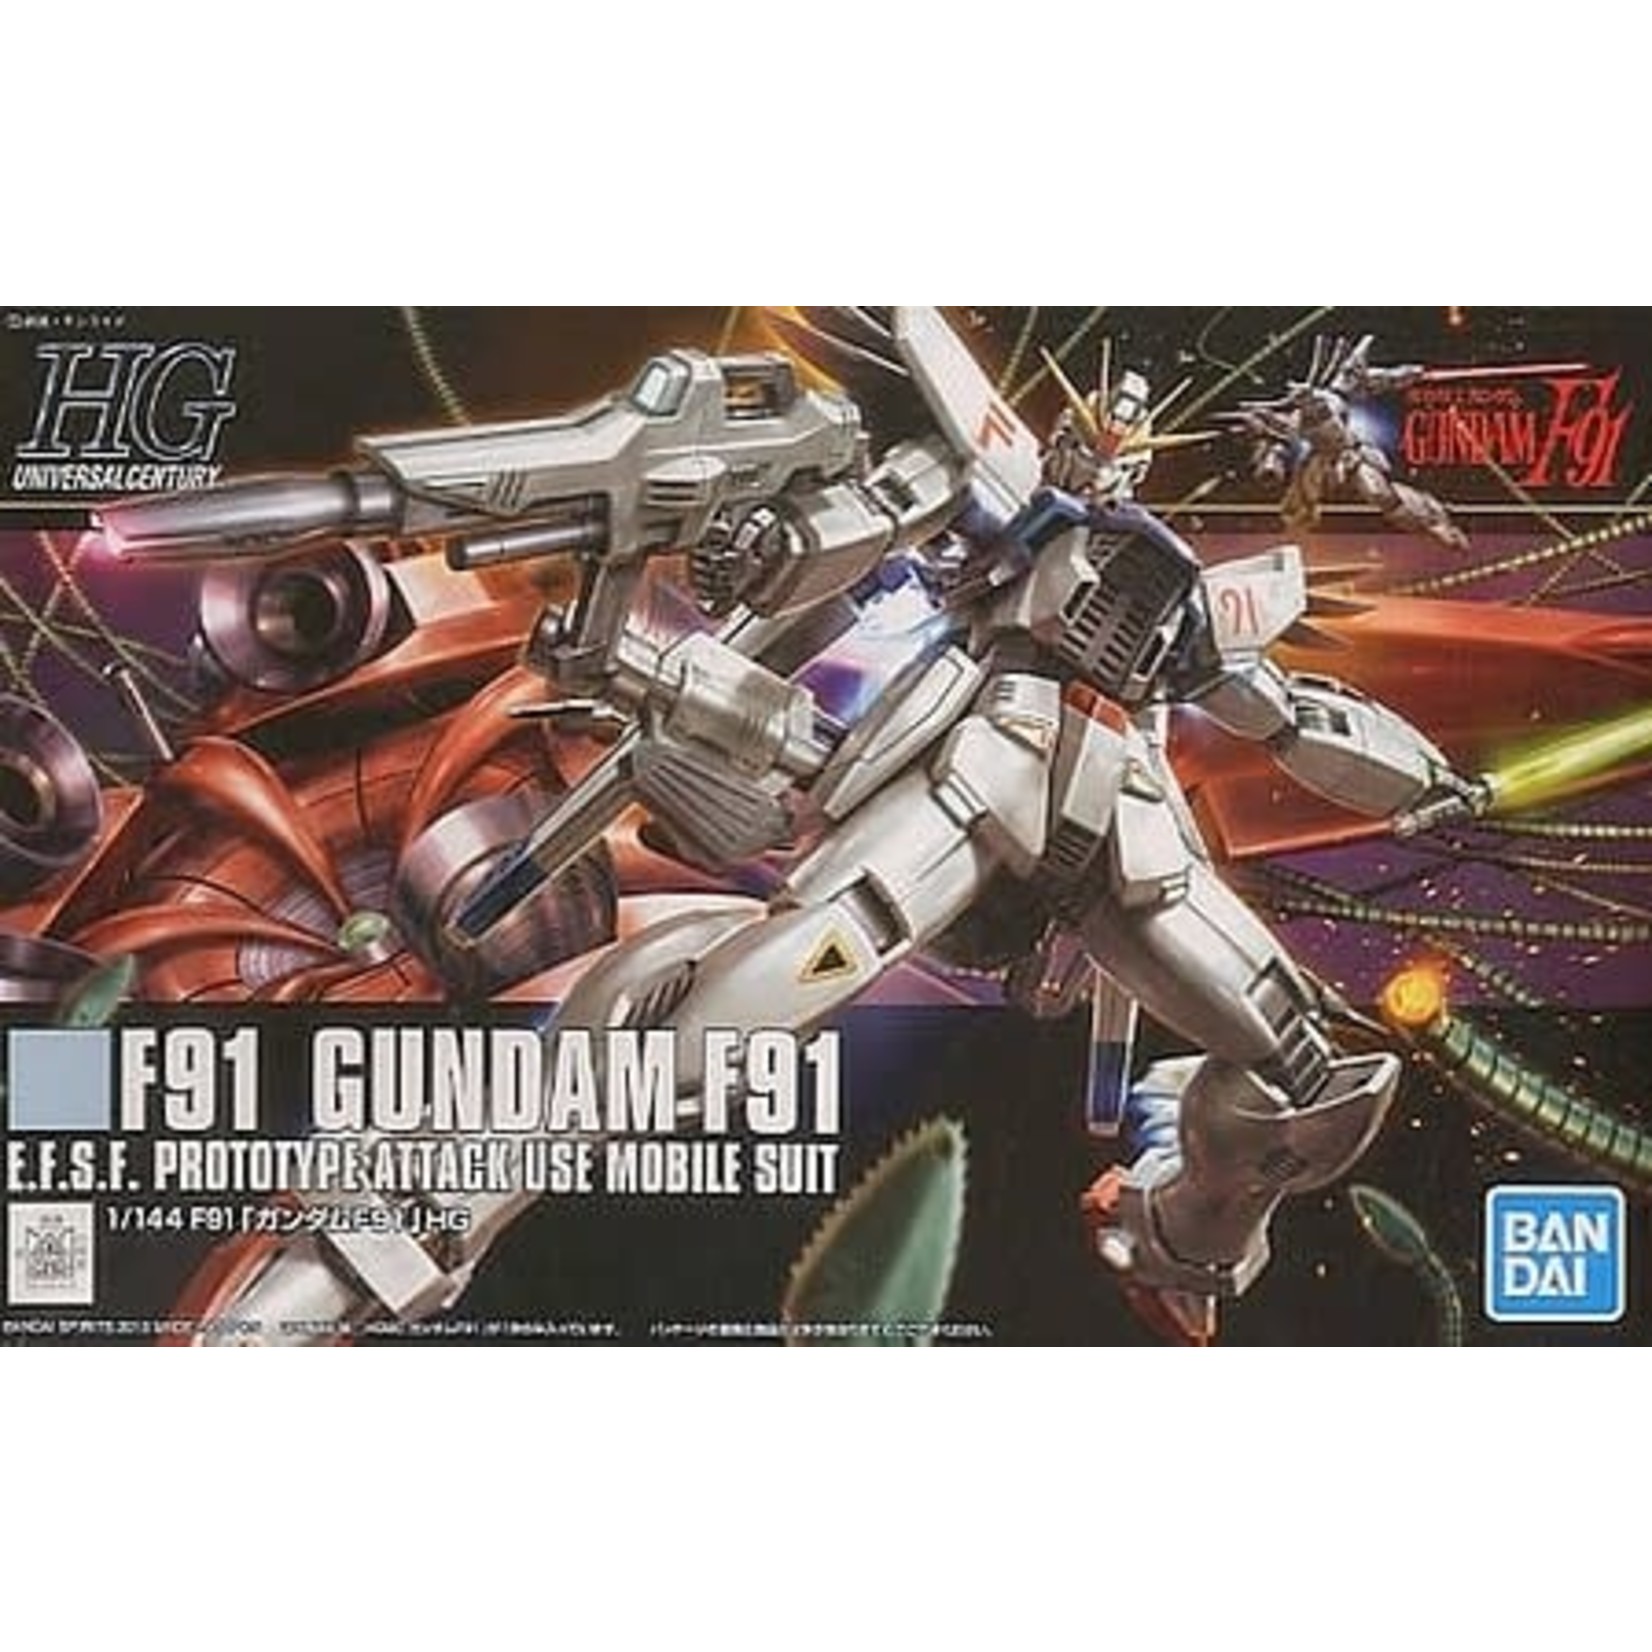 Bandai Bandai 2219523 HG #167 Gundam F91 "Gundam F91 HGUC